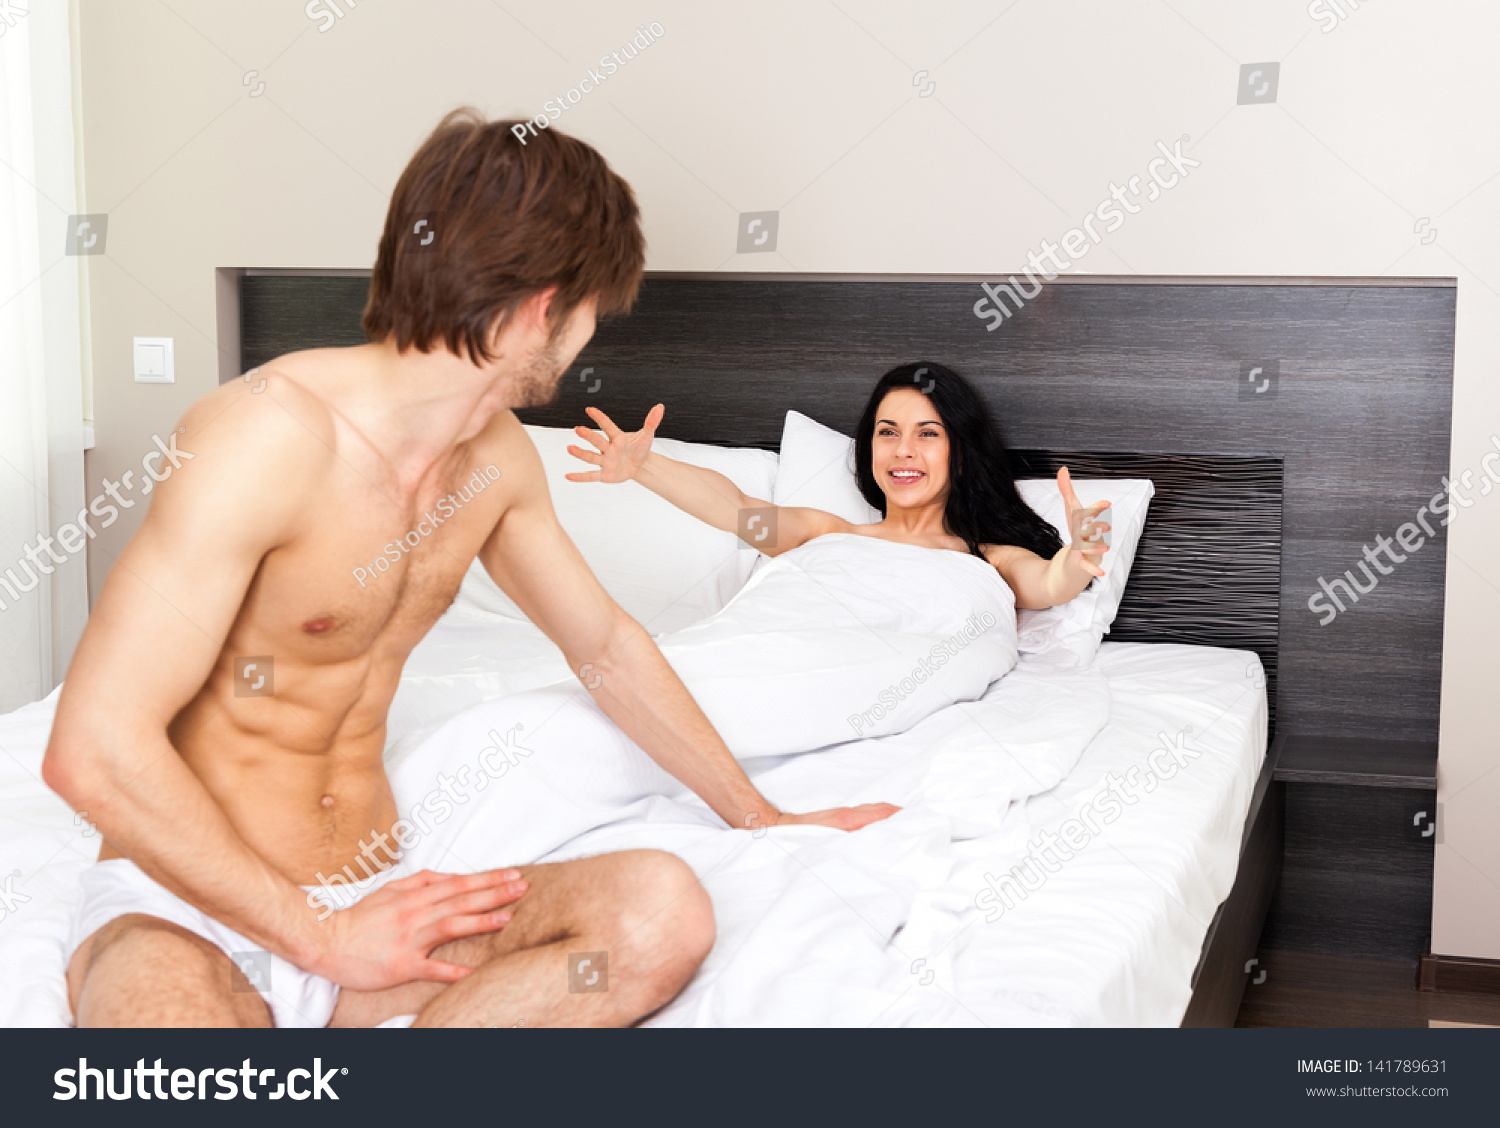 My Girlfriend Very Sex In Room